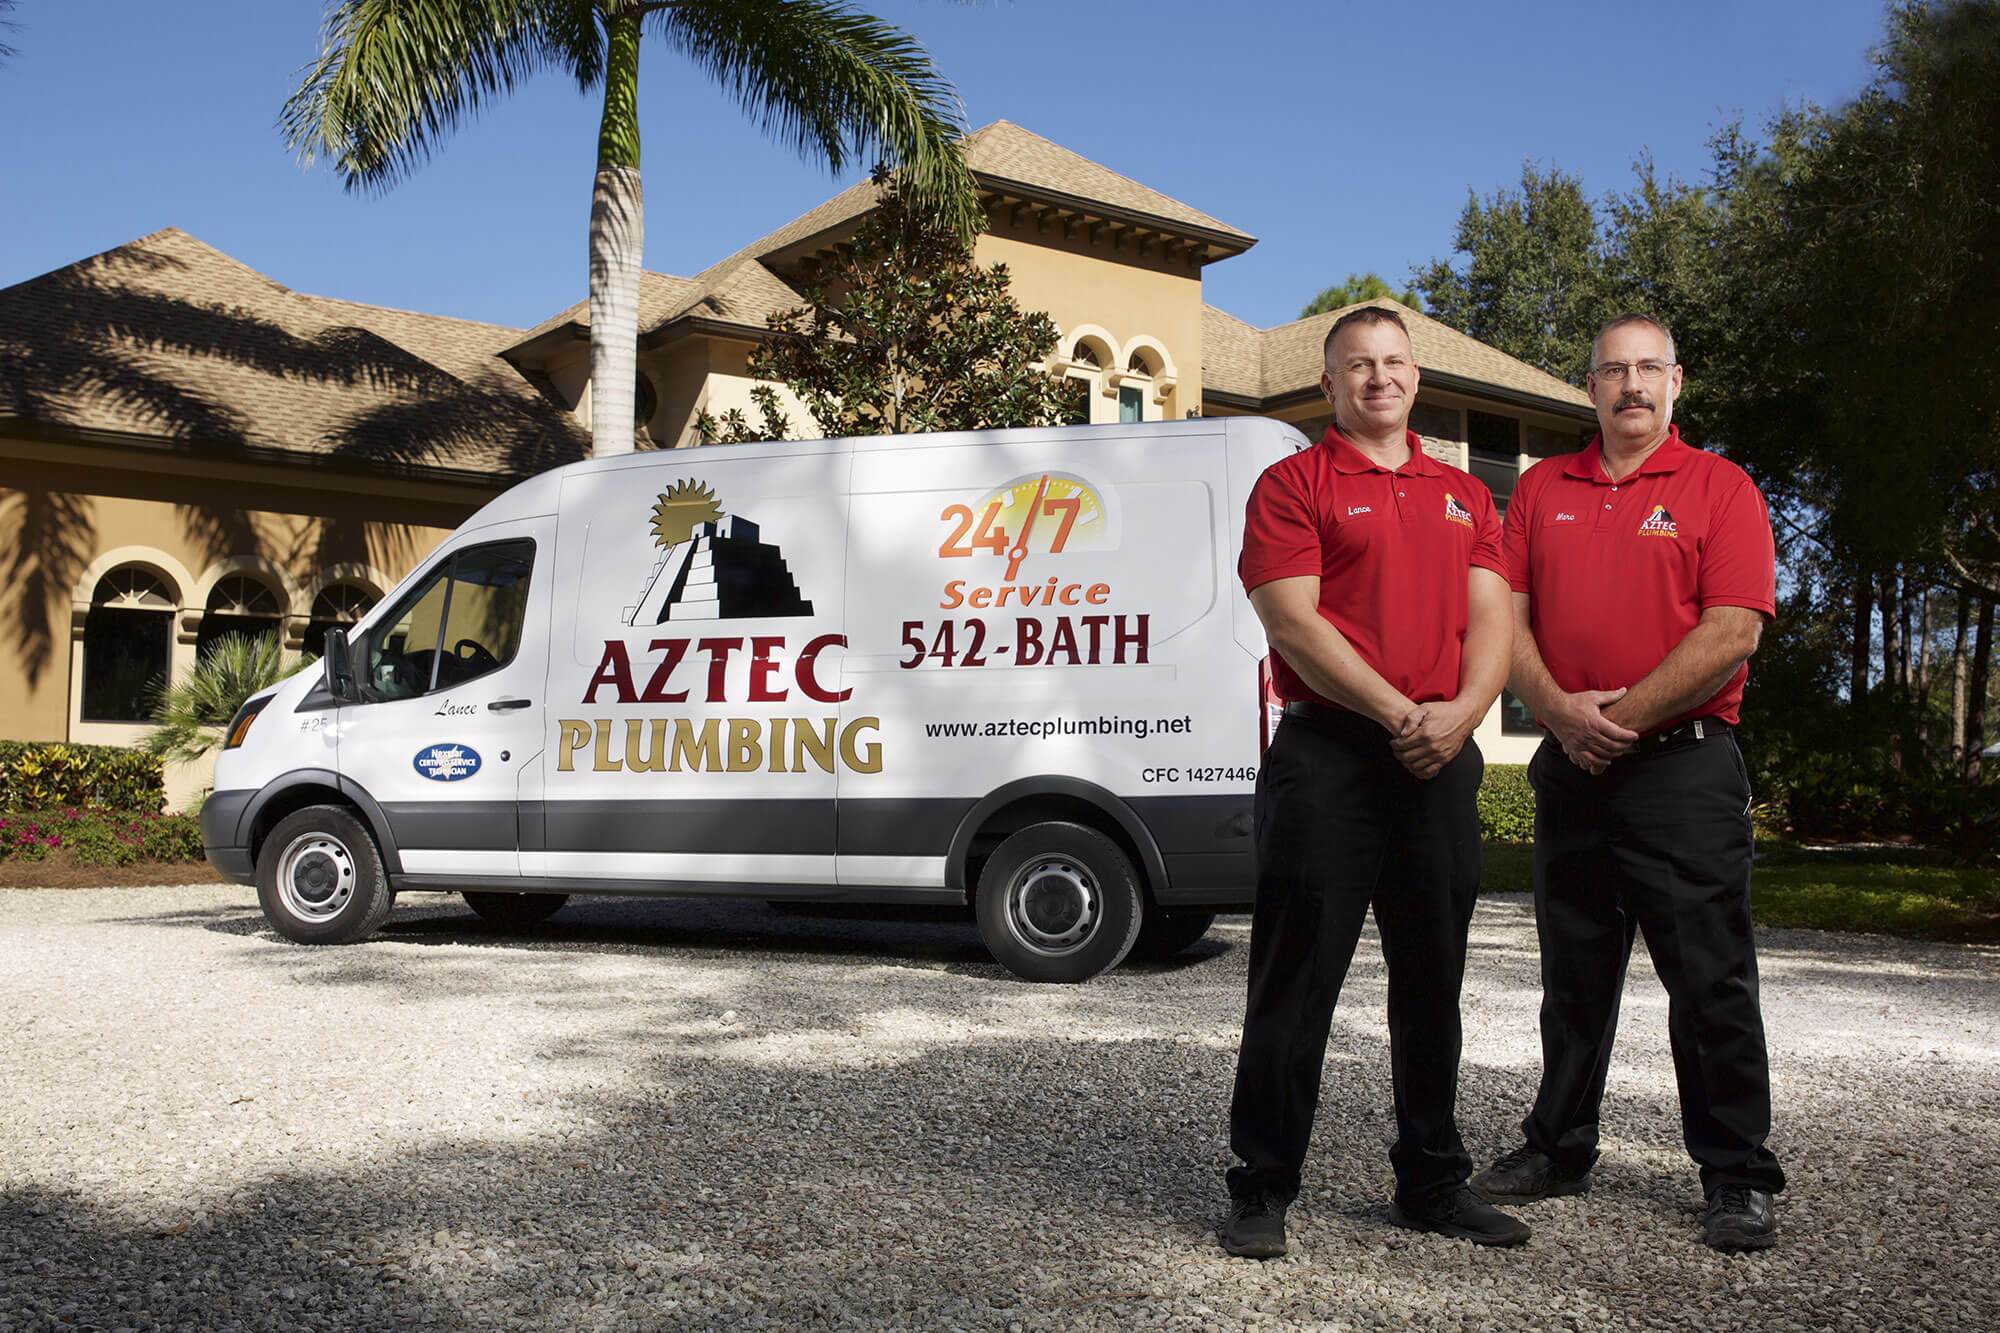  Aztec Plumbing plumbers standing in front of company truck in Port Charlotte 